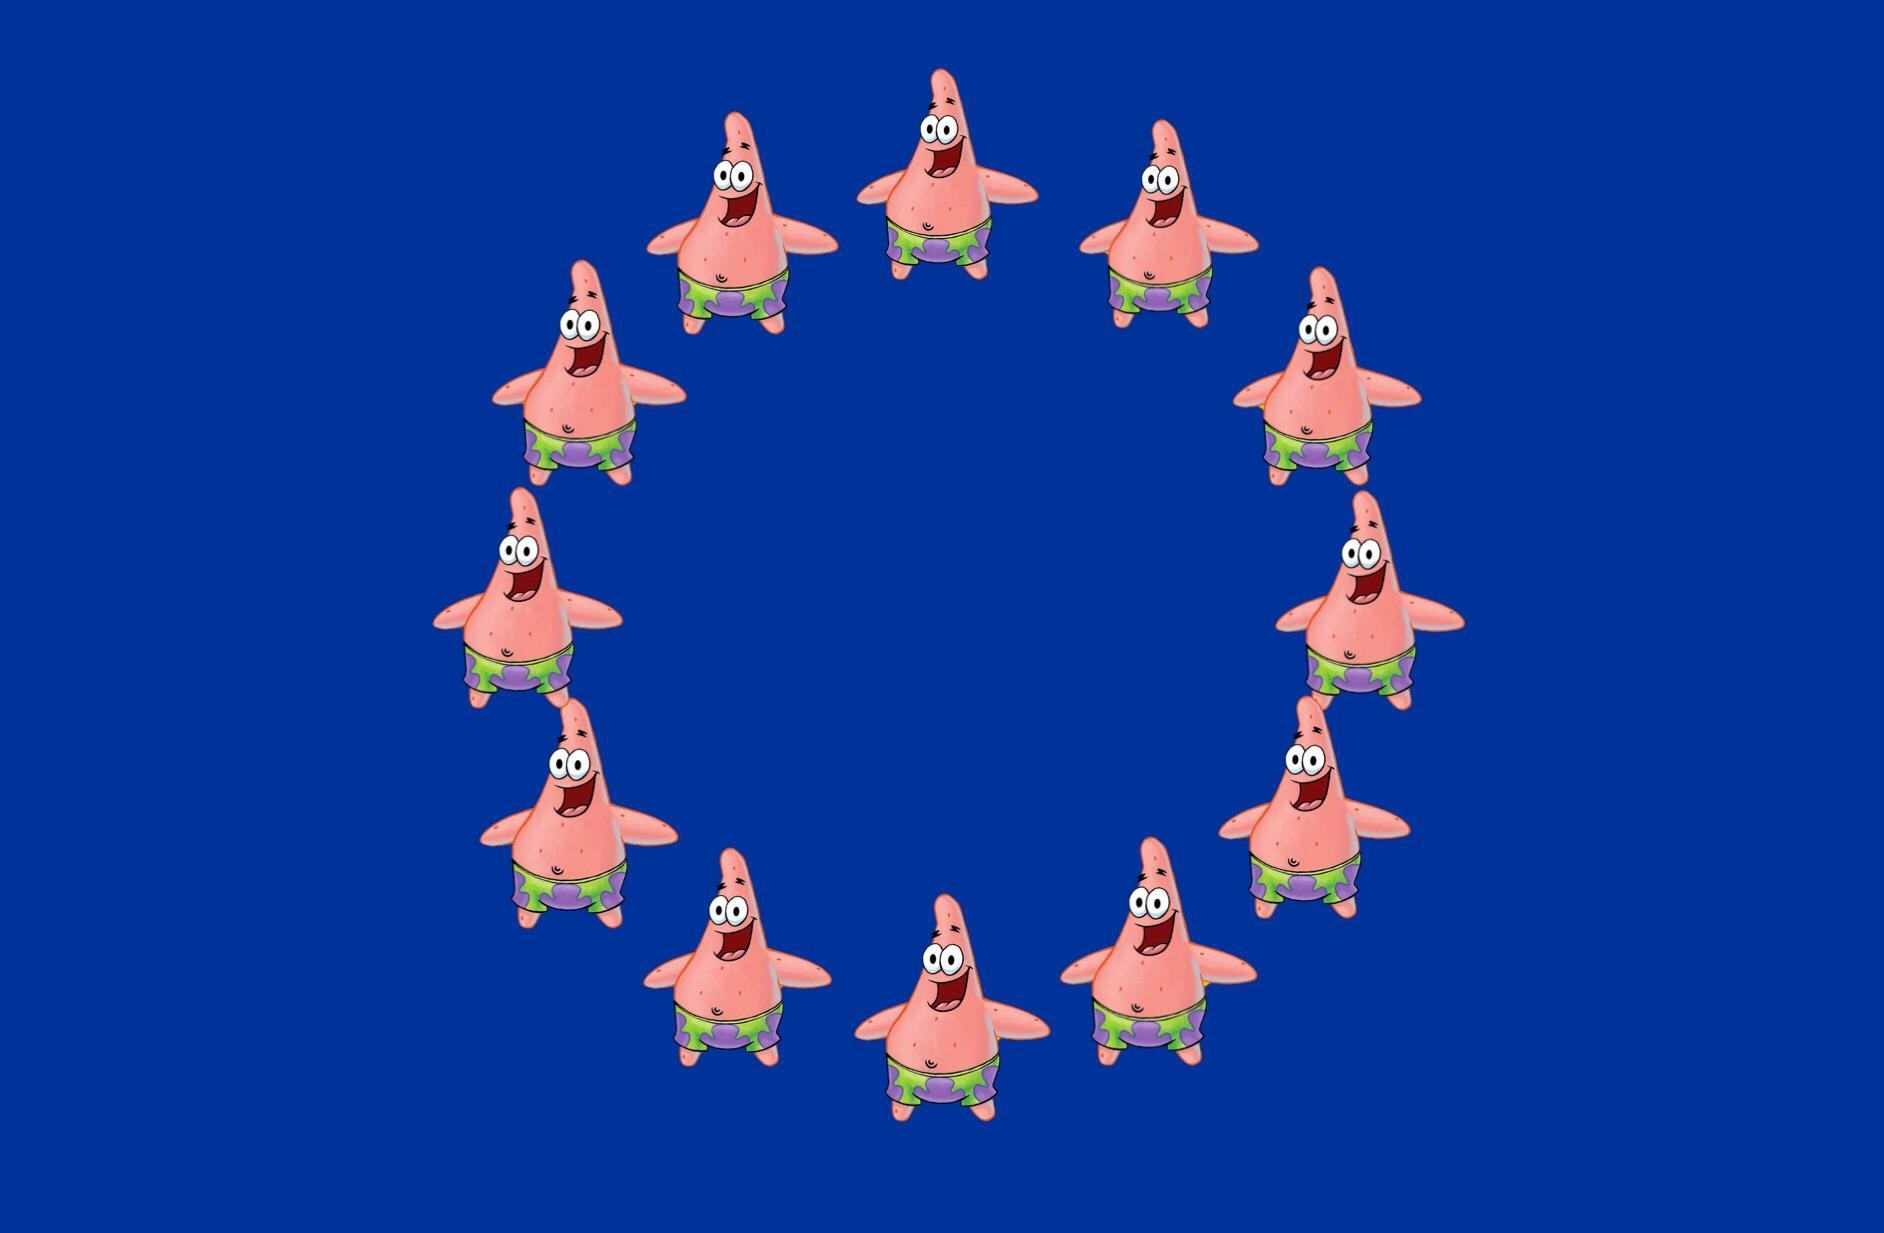 Turn the EU flag into a meme